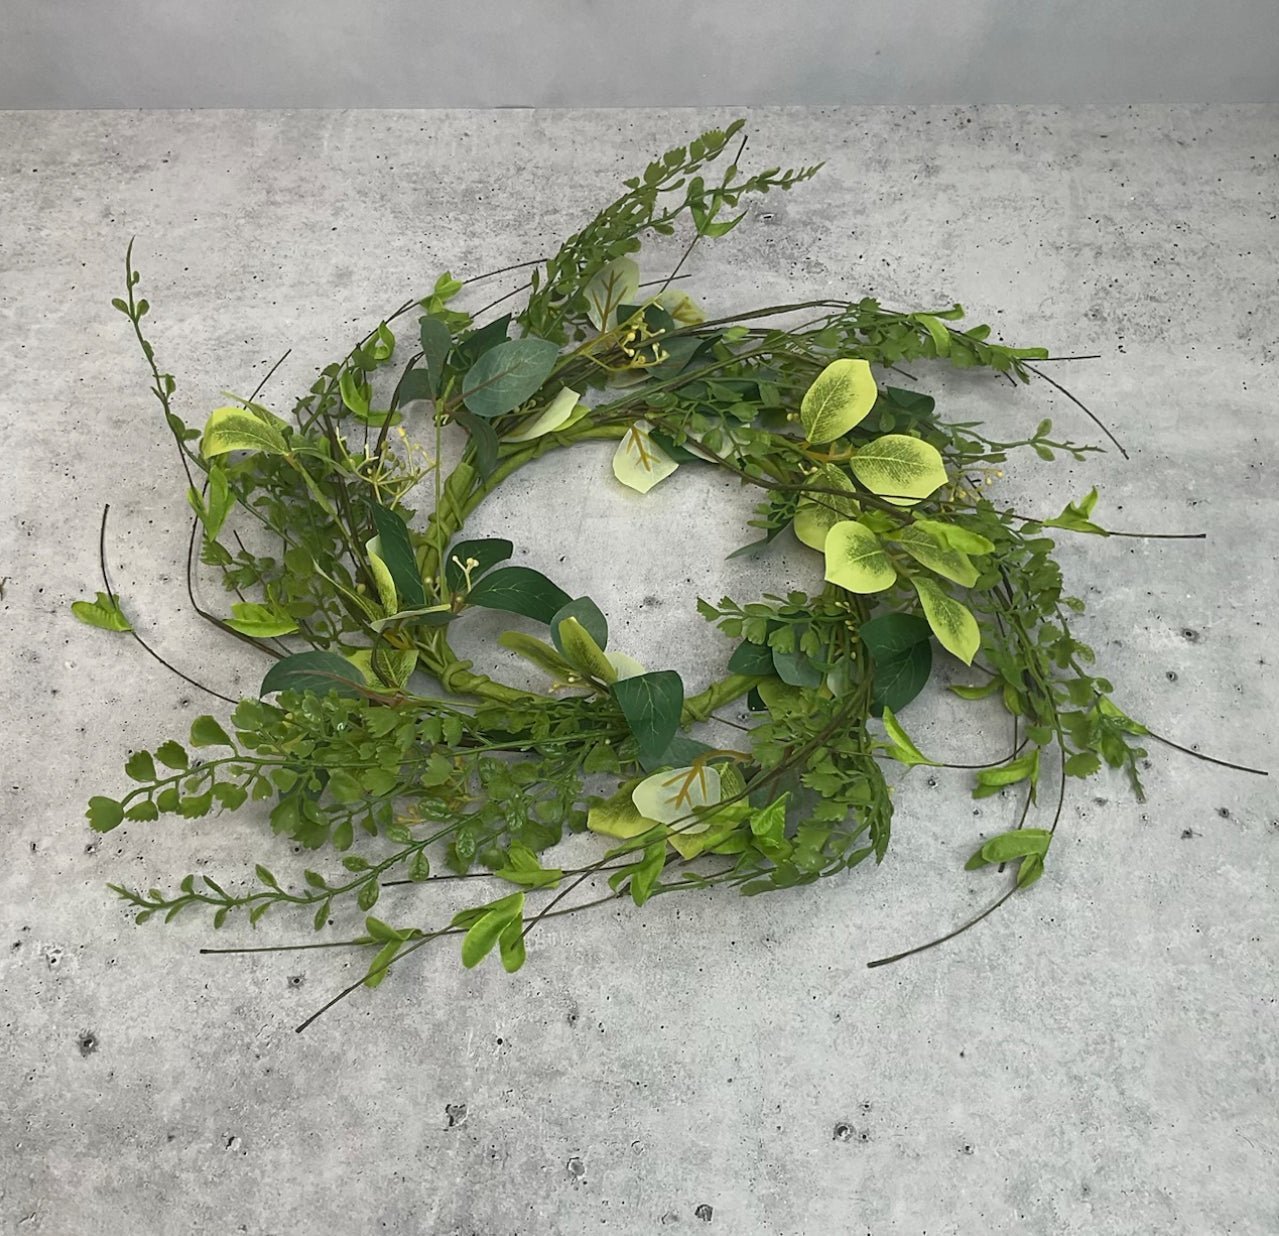 Mixed greenery and twigs candle ring mini wreath - Greenery Marketgreenery63056cr6